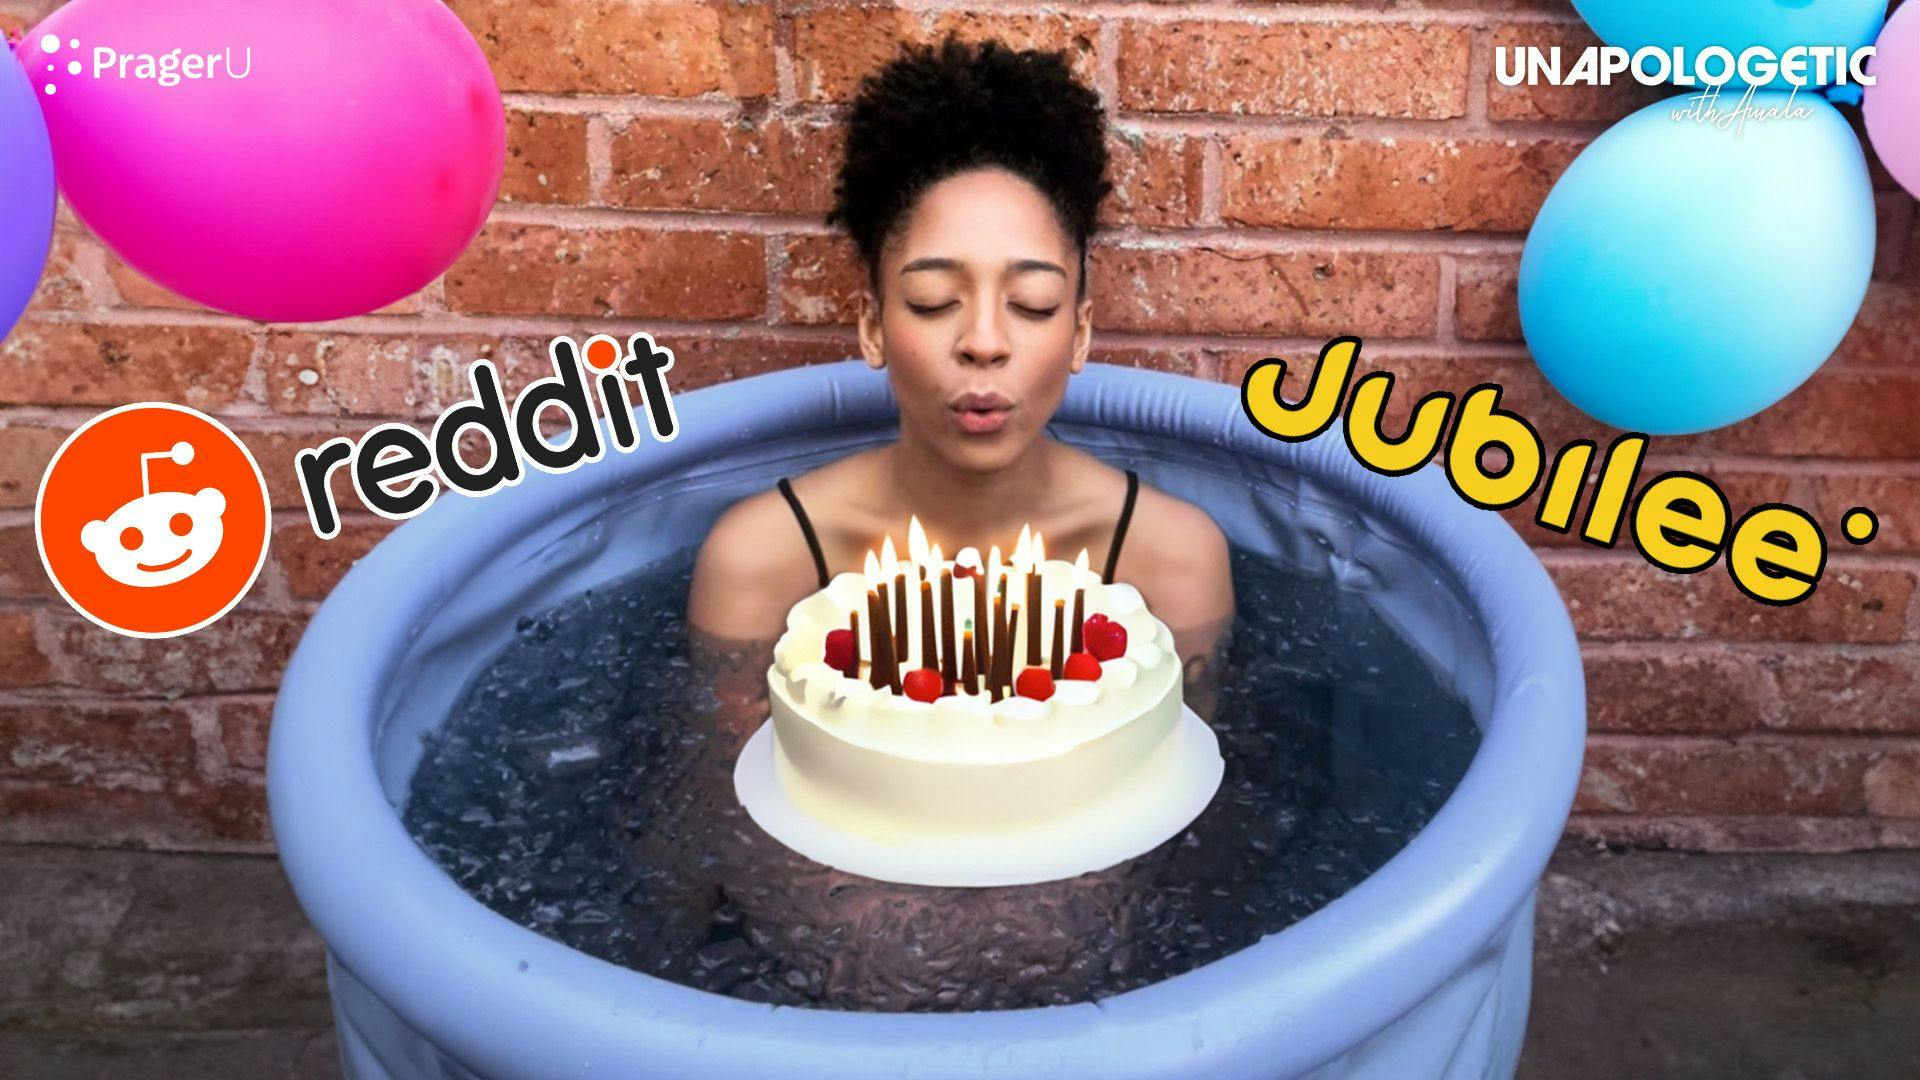 Jubilee Reaction, Reddit AITA, & It's My Birthday!